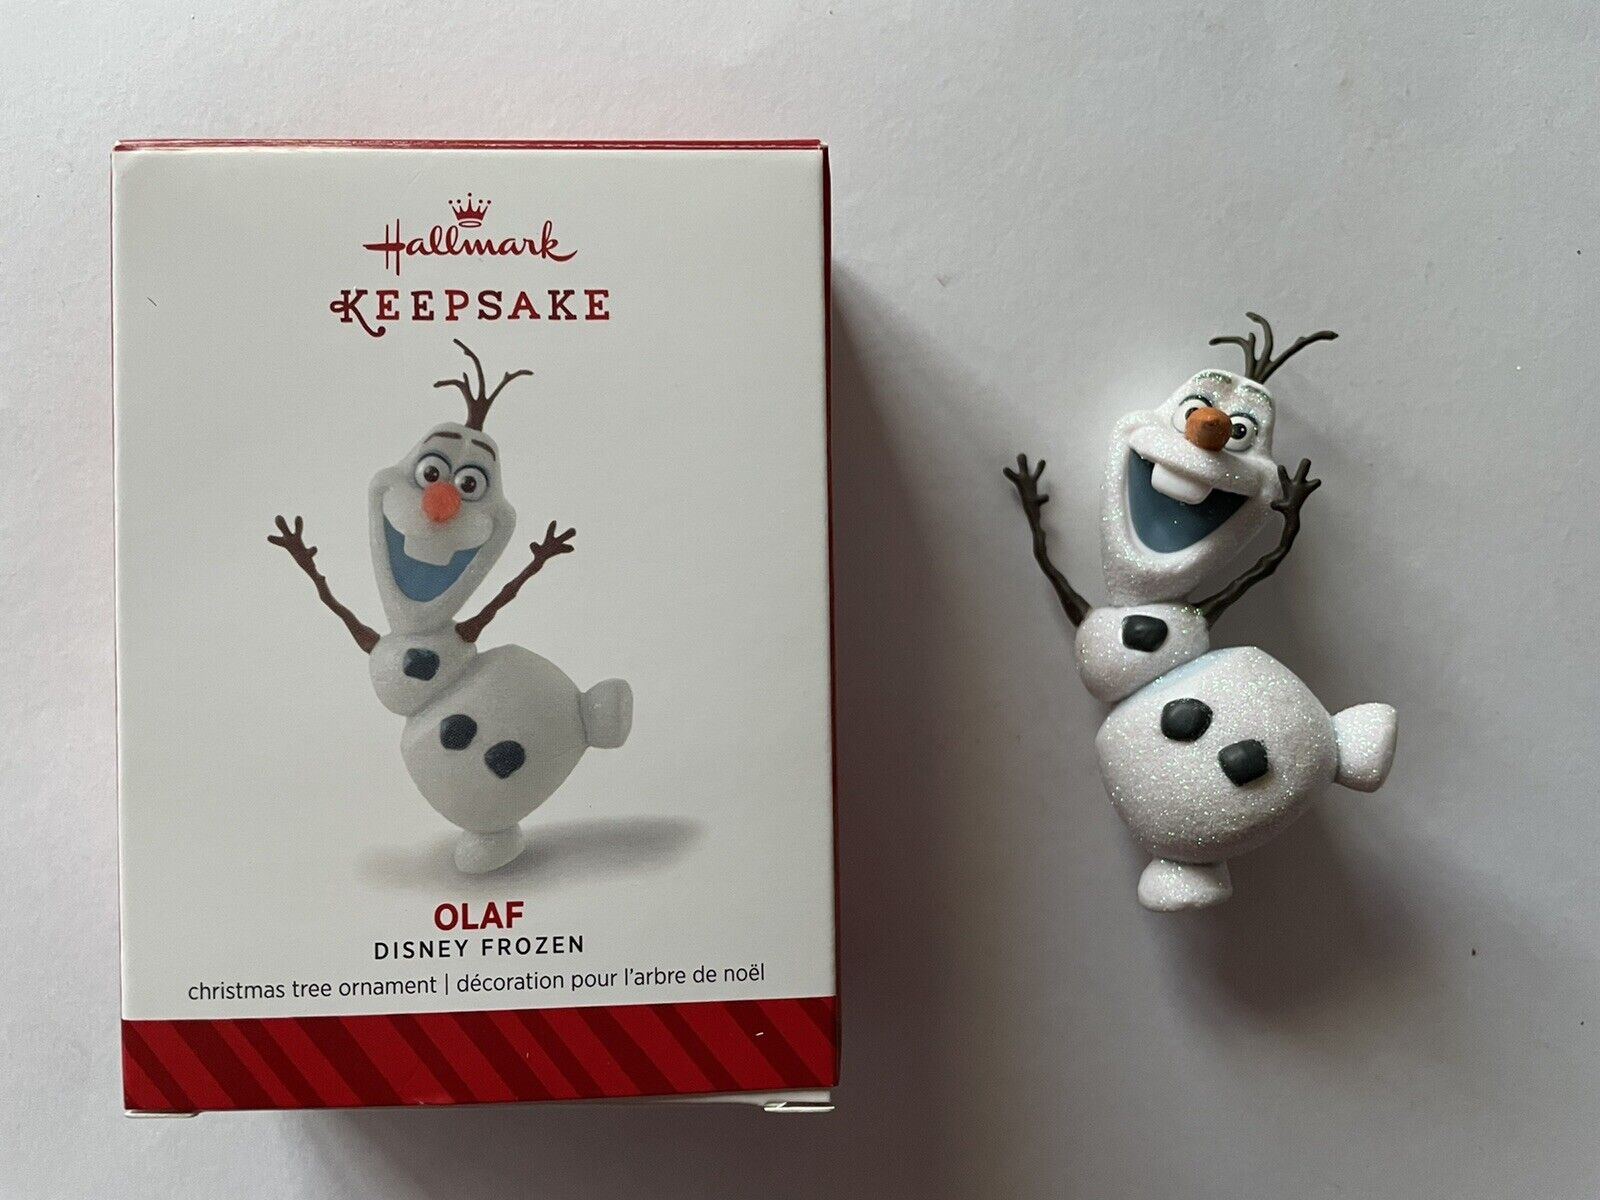 Frozen OLAF Snowman New 2014 Hallmark Keepsake Christmas Tree Ornament